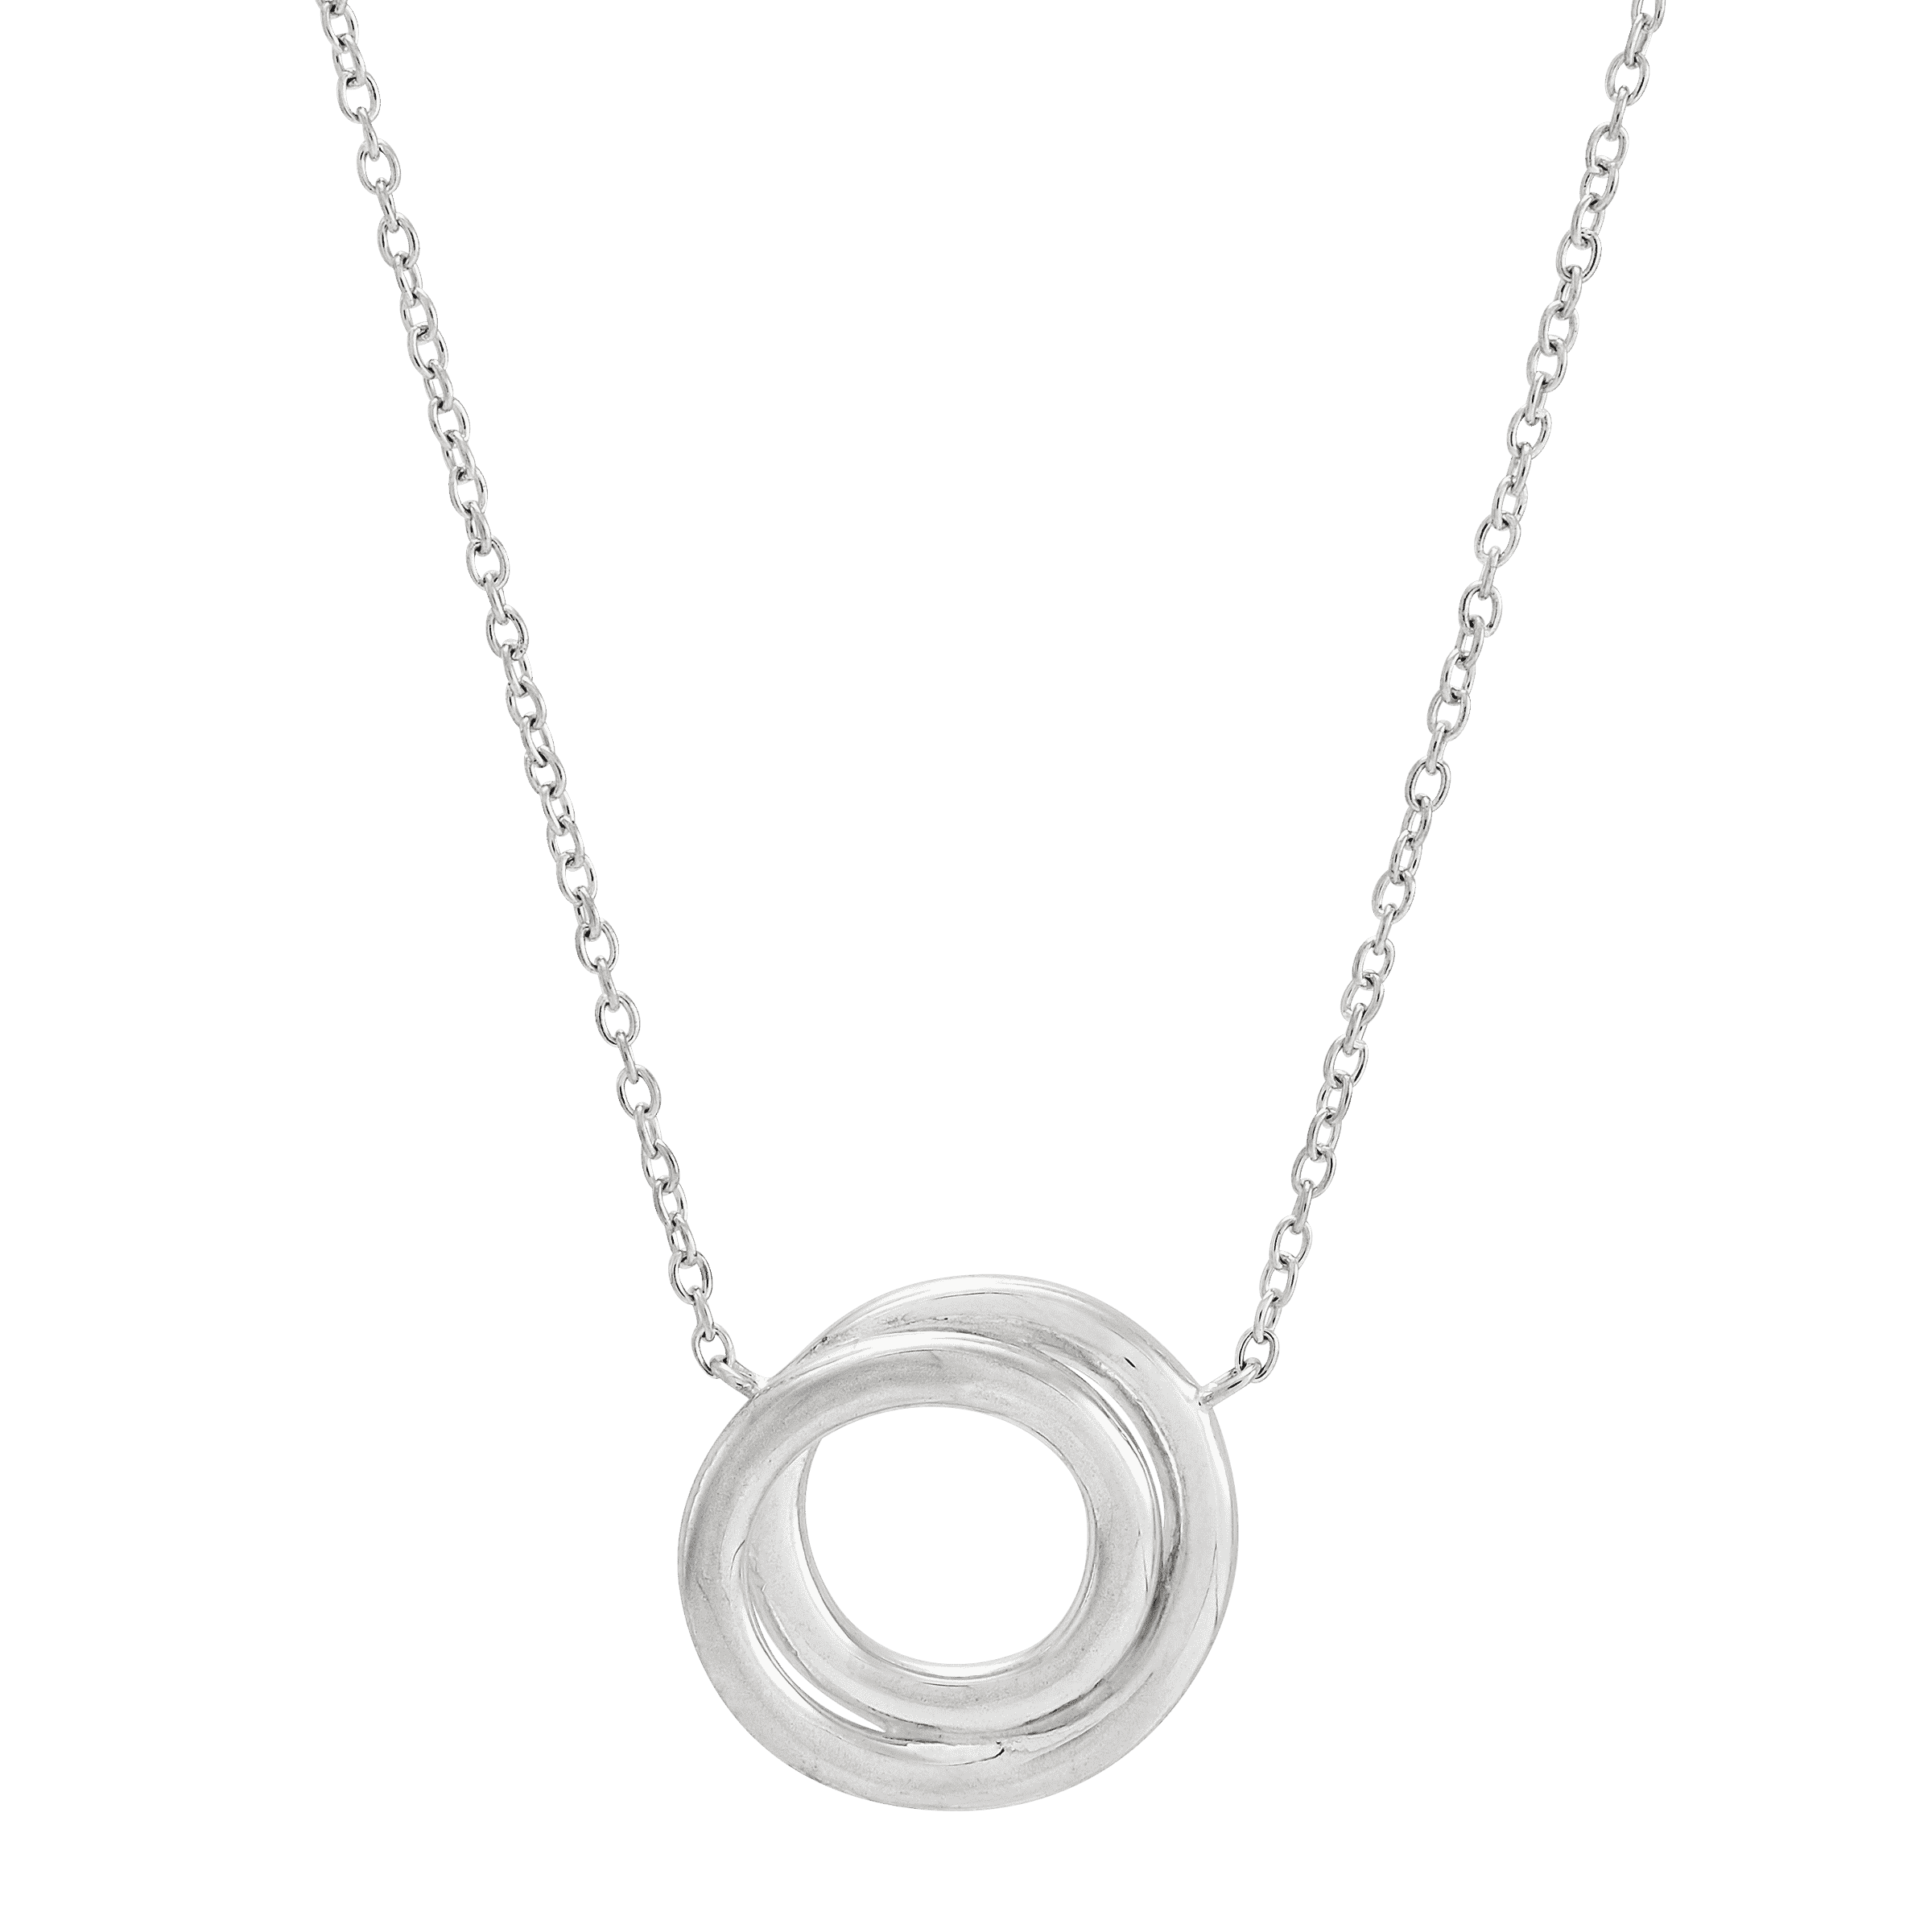 Silpada 'Karma Swirl' Pendant Necklace in Sterling Silver, 18